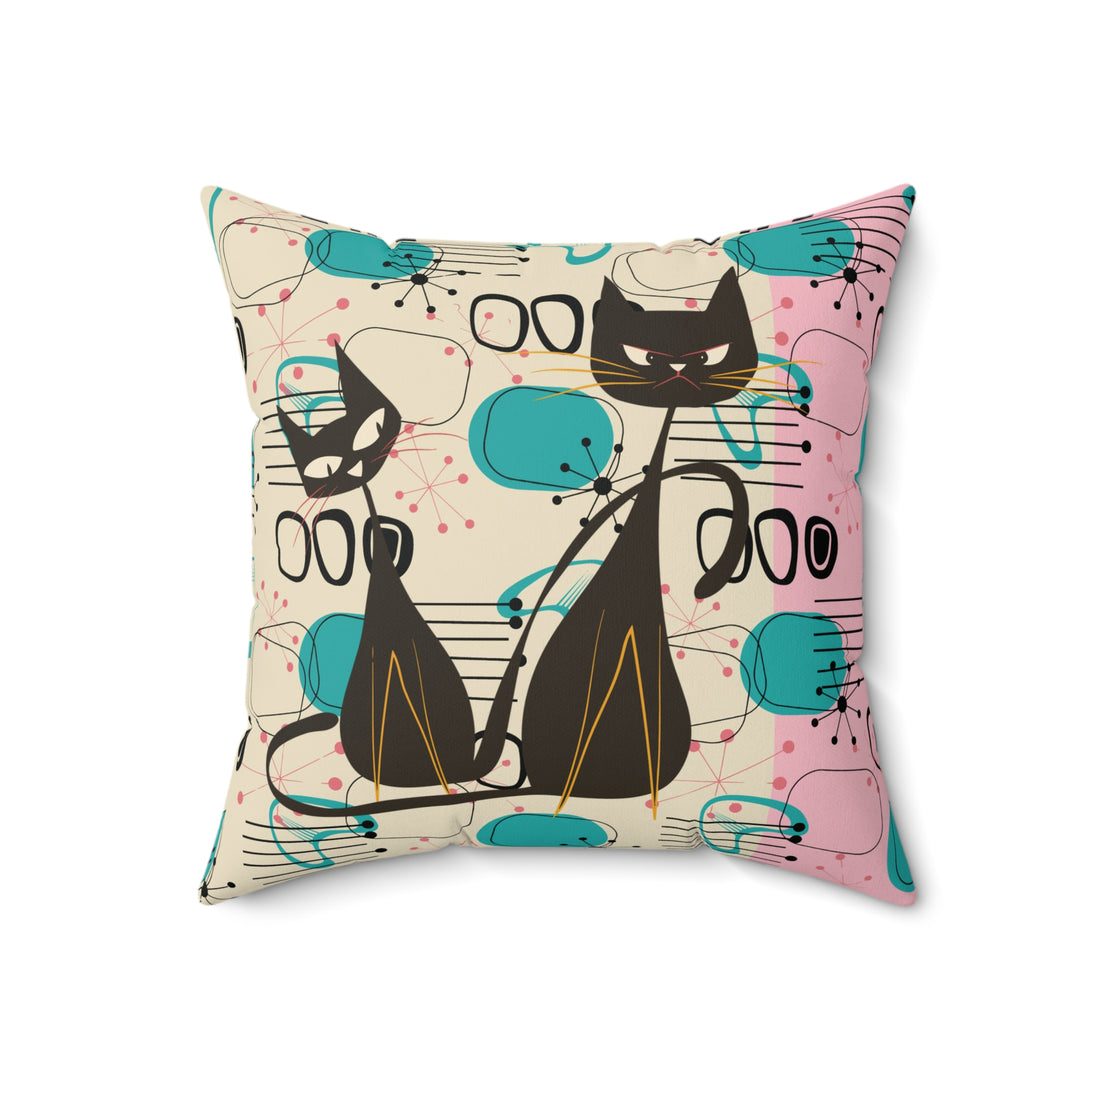 Retro Atomic Cat Mid Century Modern Throw Pillow, Geometric Pink Turquoise and Black MCM Cushion